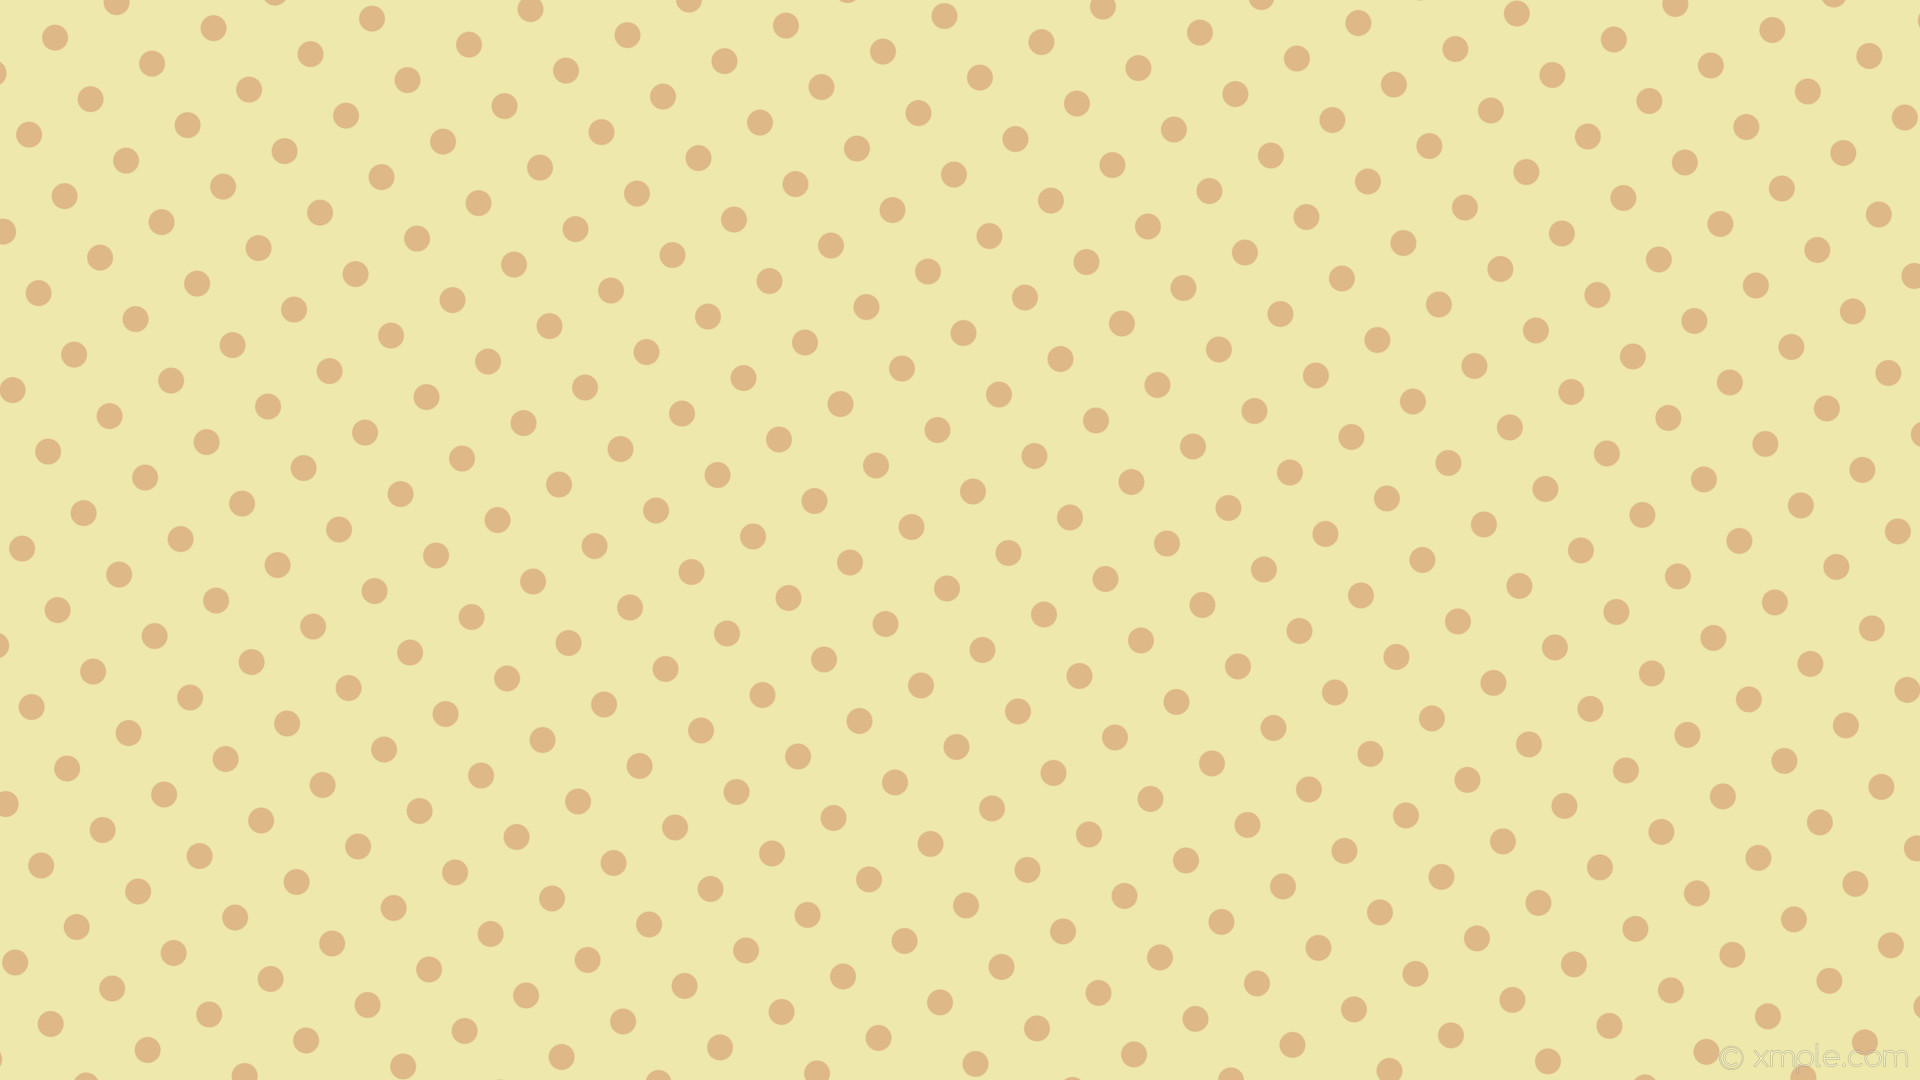 1920x1080 wallpaper yellow spots brown polka dots pale goldenrod burly wood #eee8aa  #deb887 30Â°